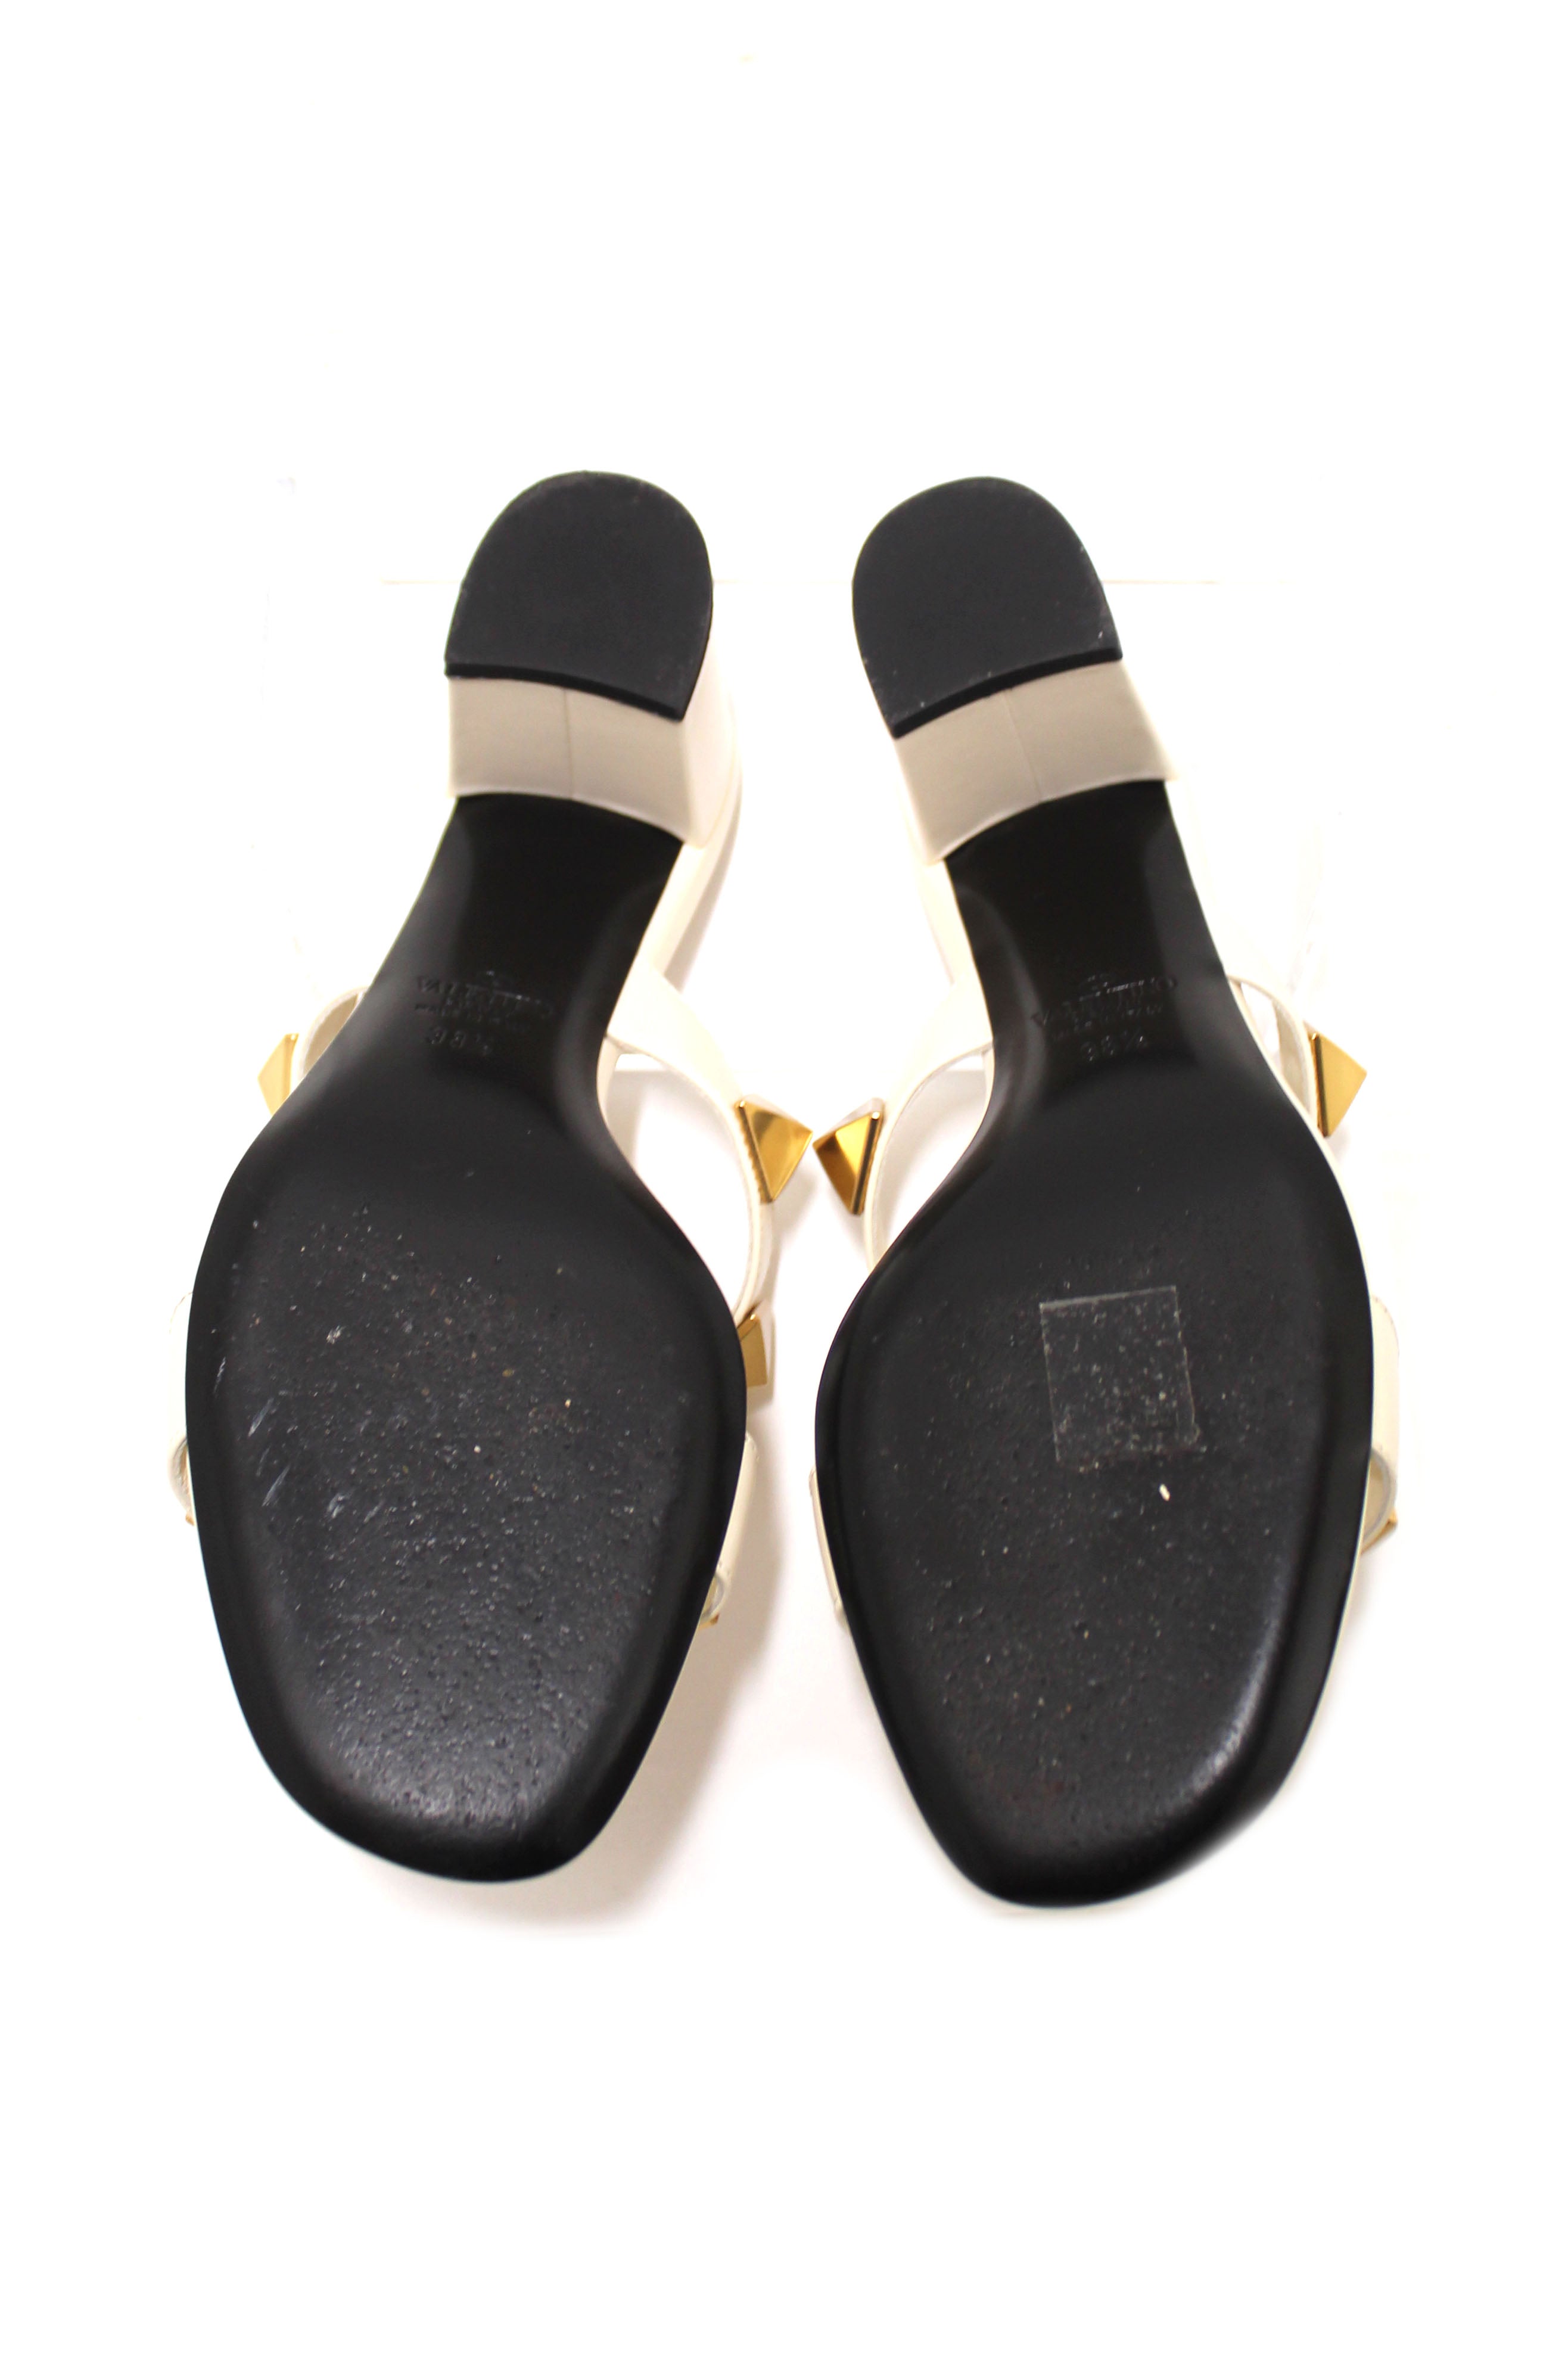 Authentic Valentino Garavani White Leather Roman Stud Sandals Size 38.5